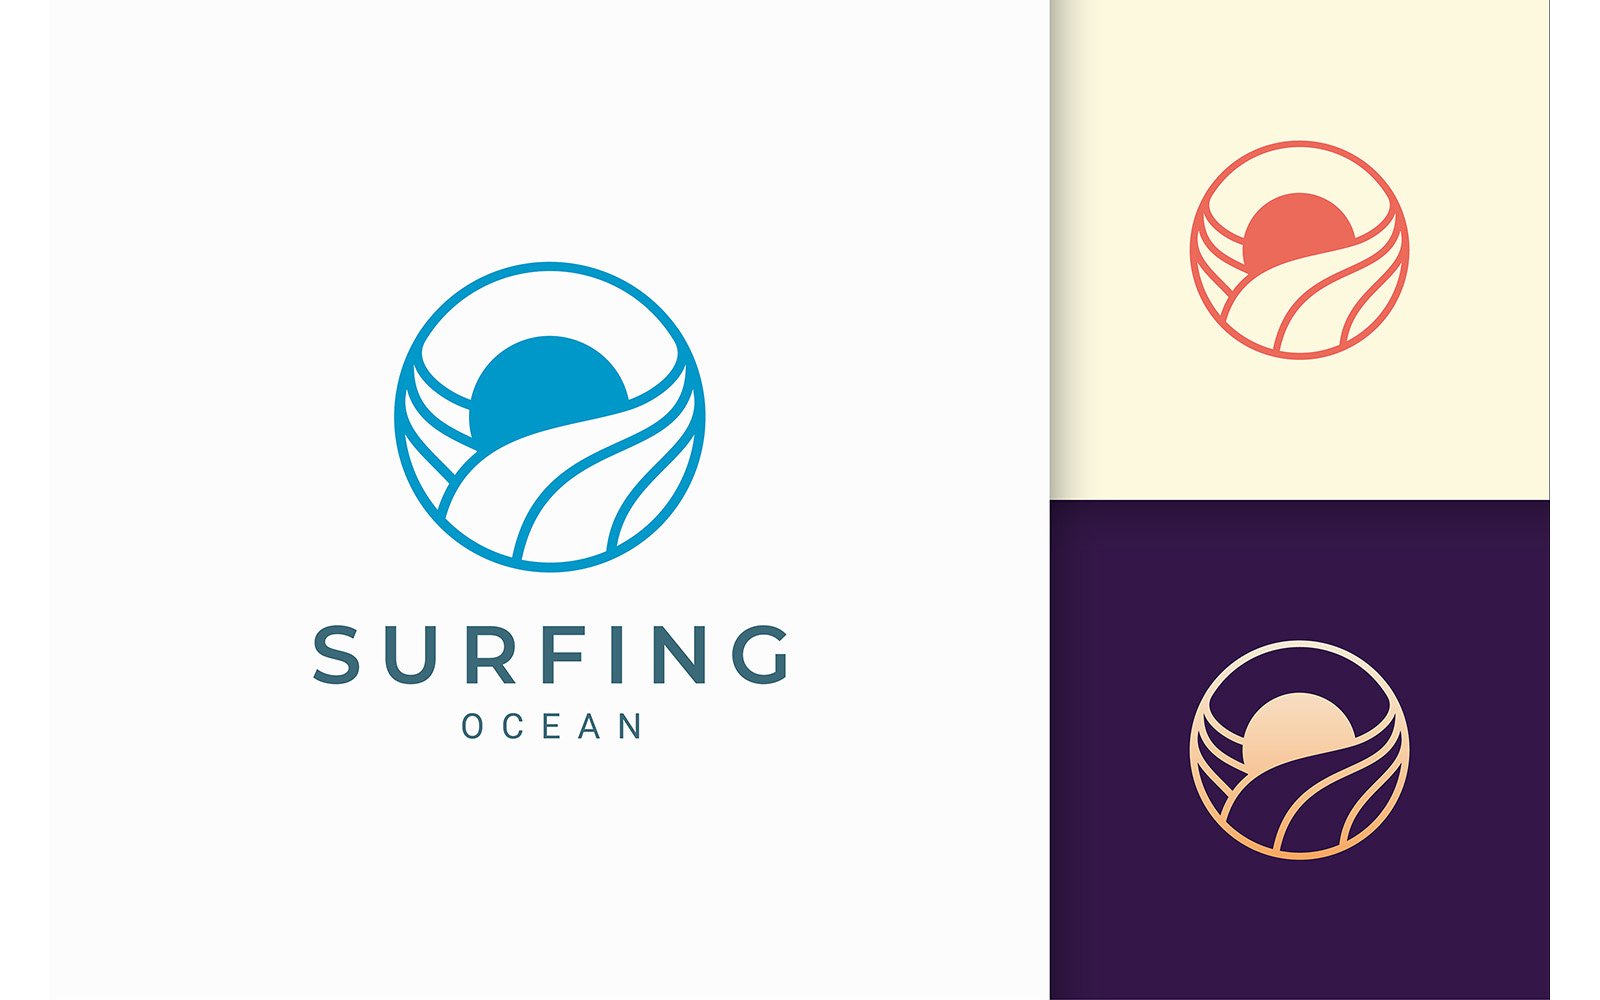 Ocean or Water Theme Logo Template